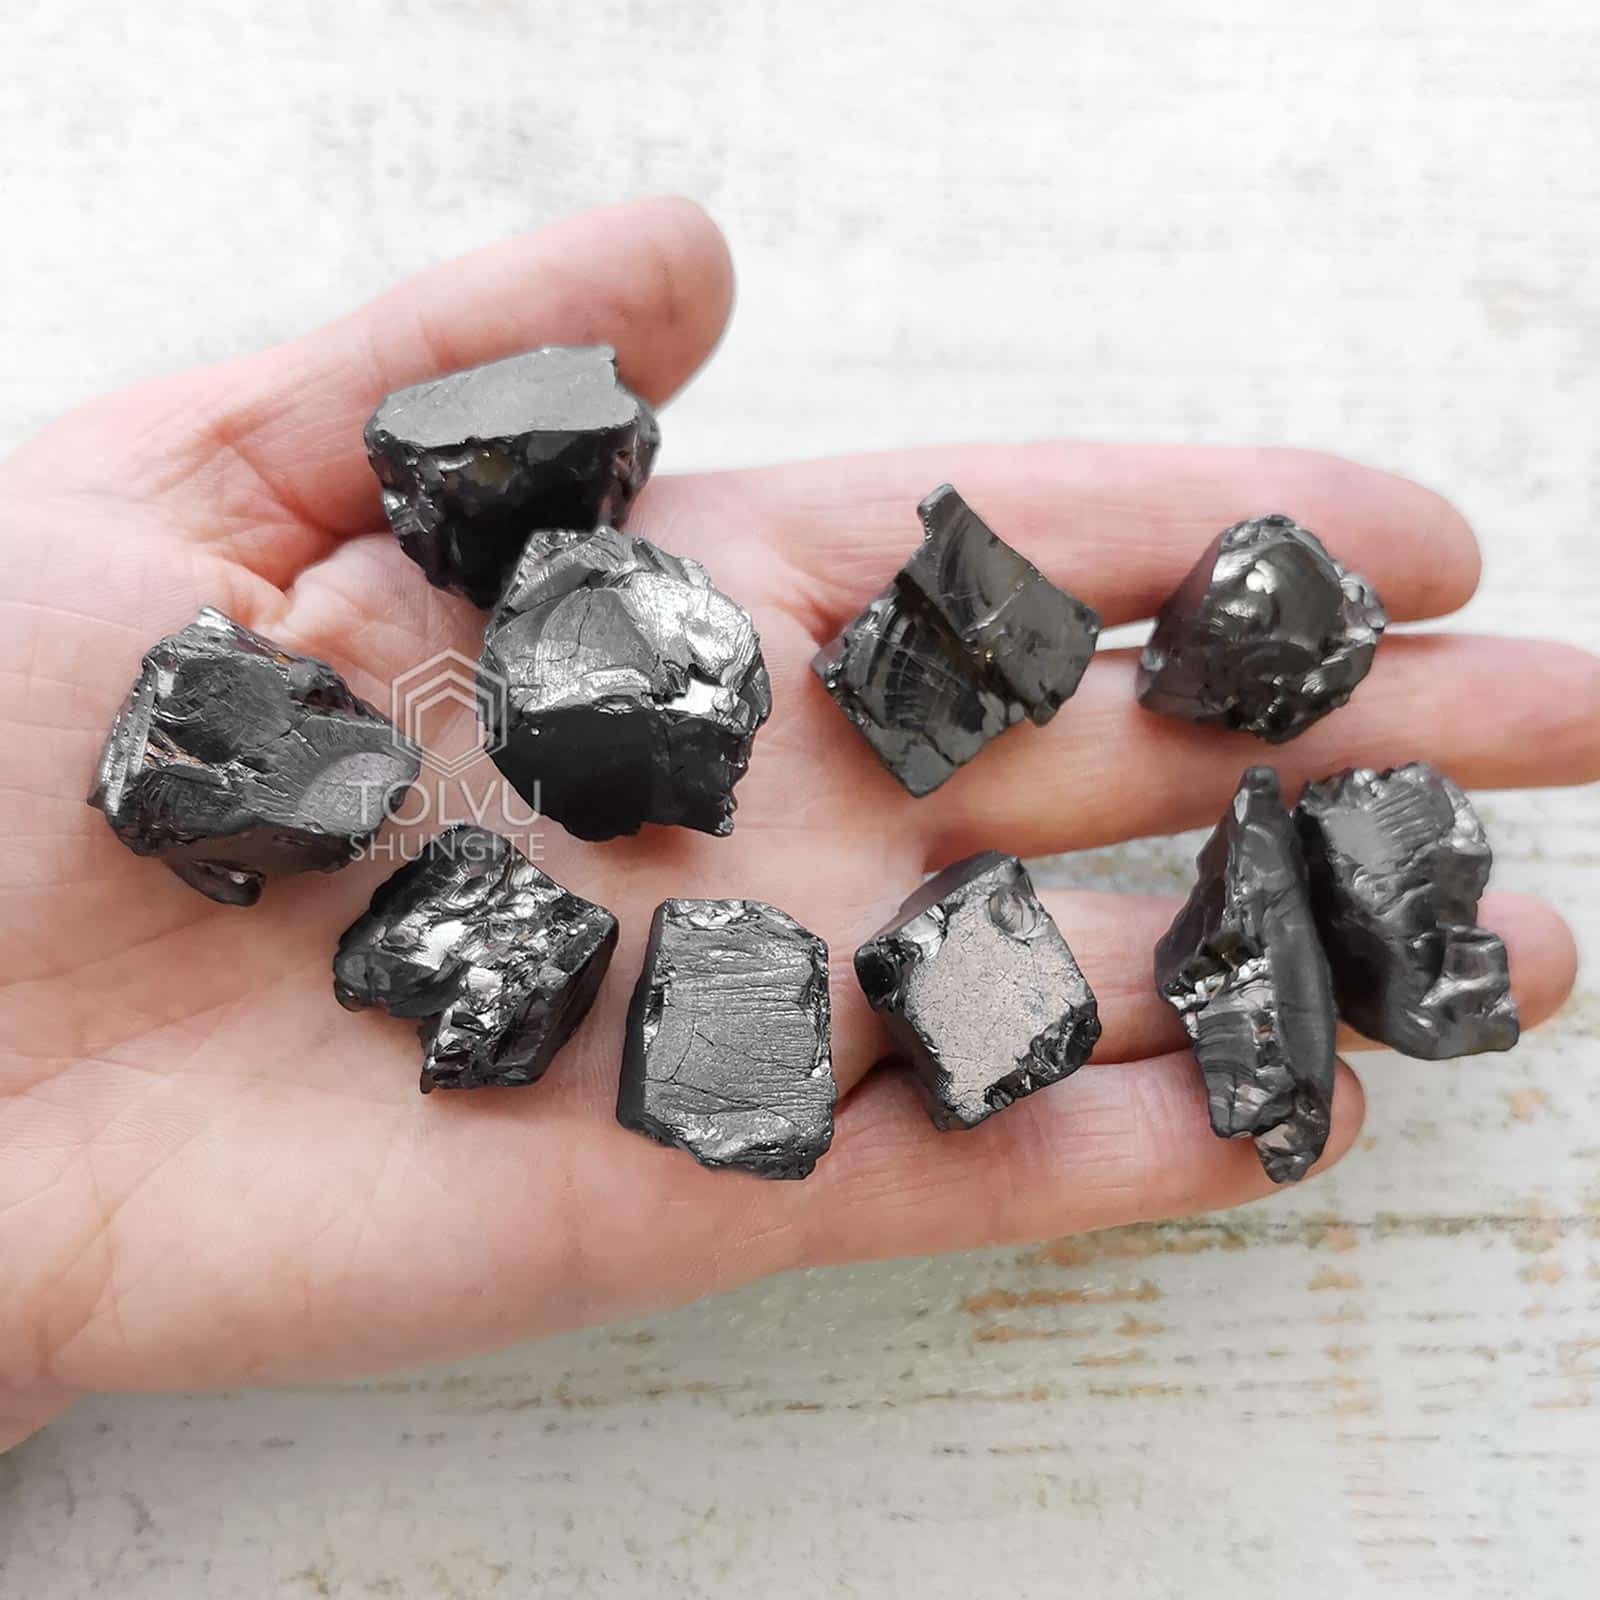 Elite noble shungite stones, 98% carbon